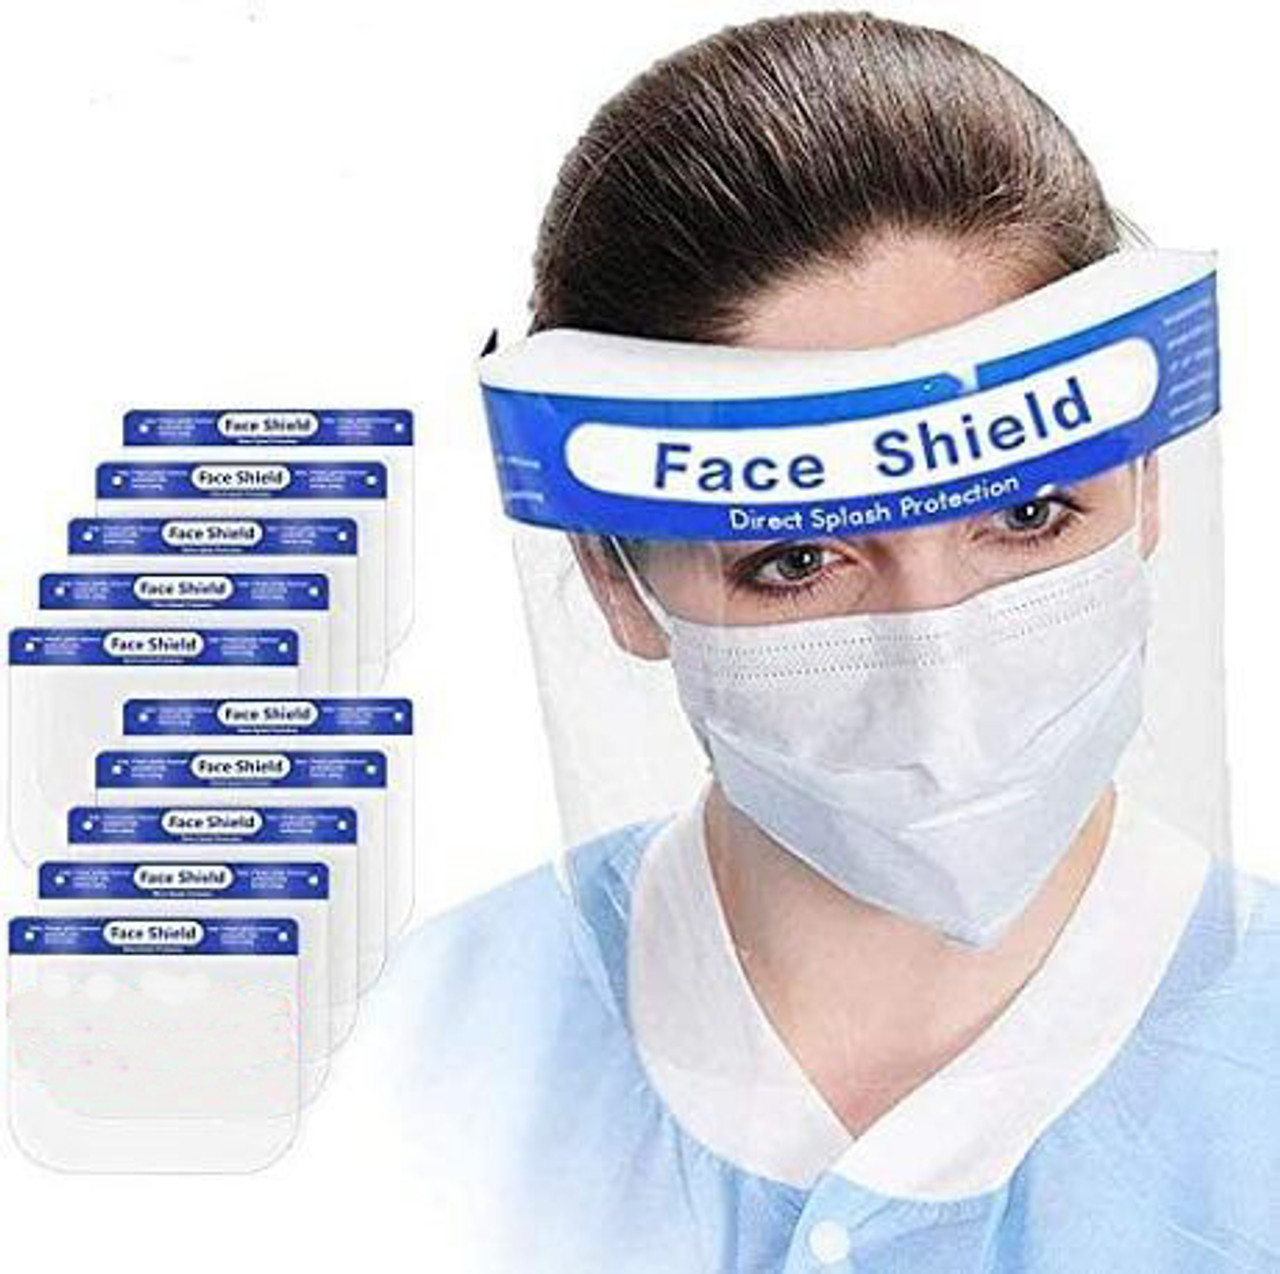 DemeTECH Corporation Surgical Disposable Face Mask ASTM Level 3, 10 Pack, Blue, Regular